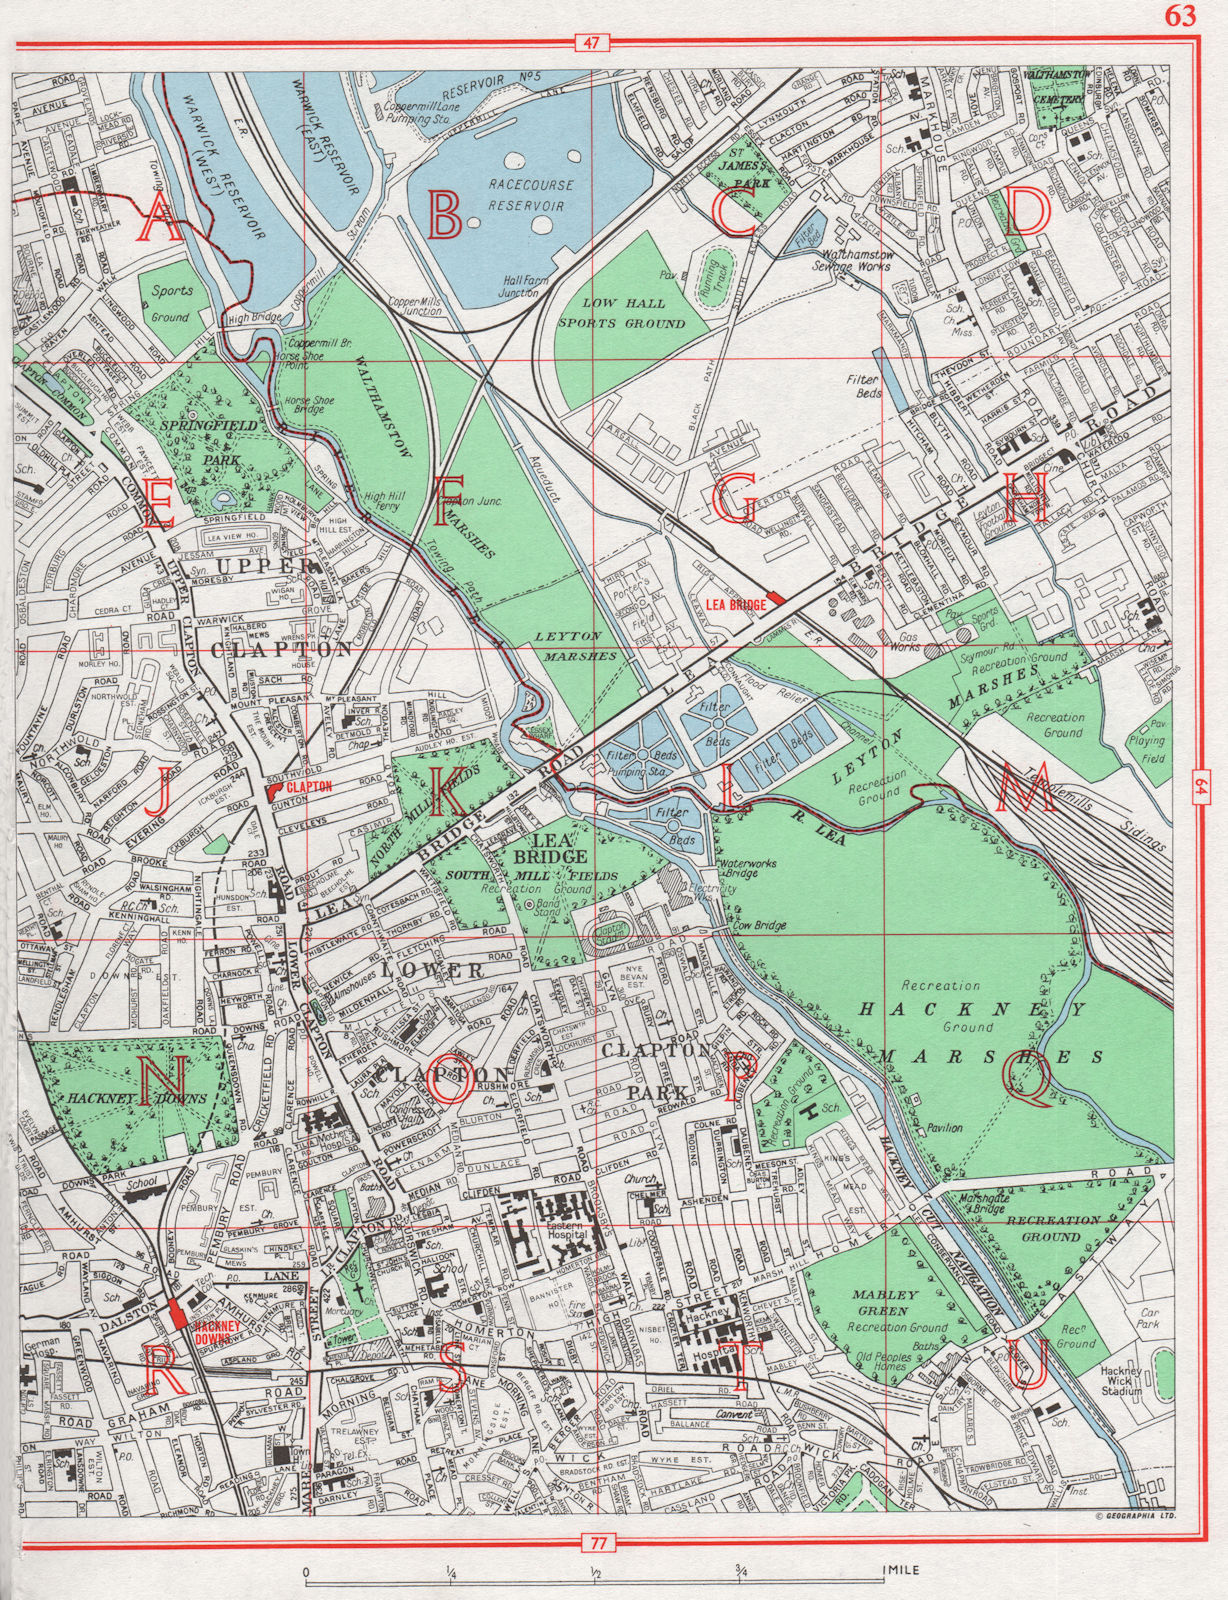 CLAPTON.Clapton Park Lower Clapton Upper Clapton Hackney Marshes Leyton 1964 map